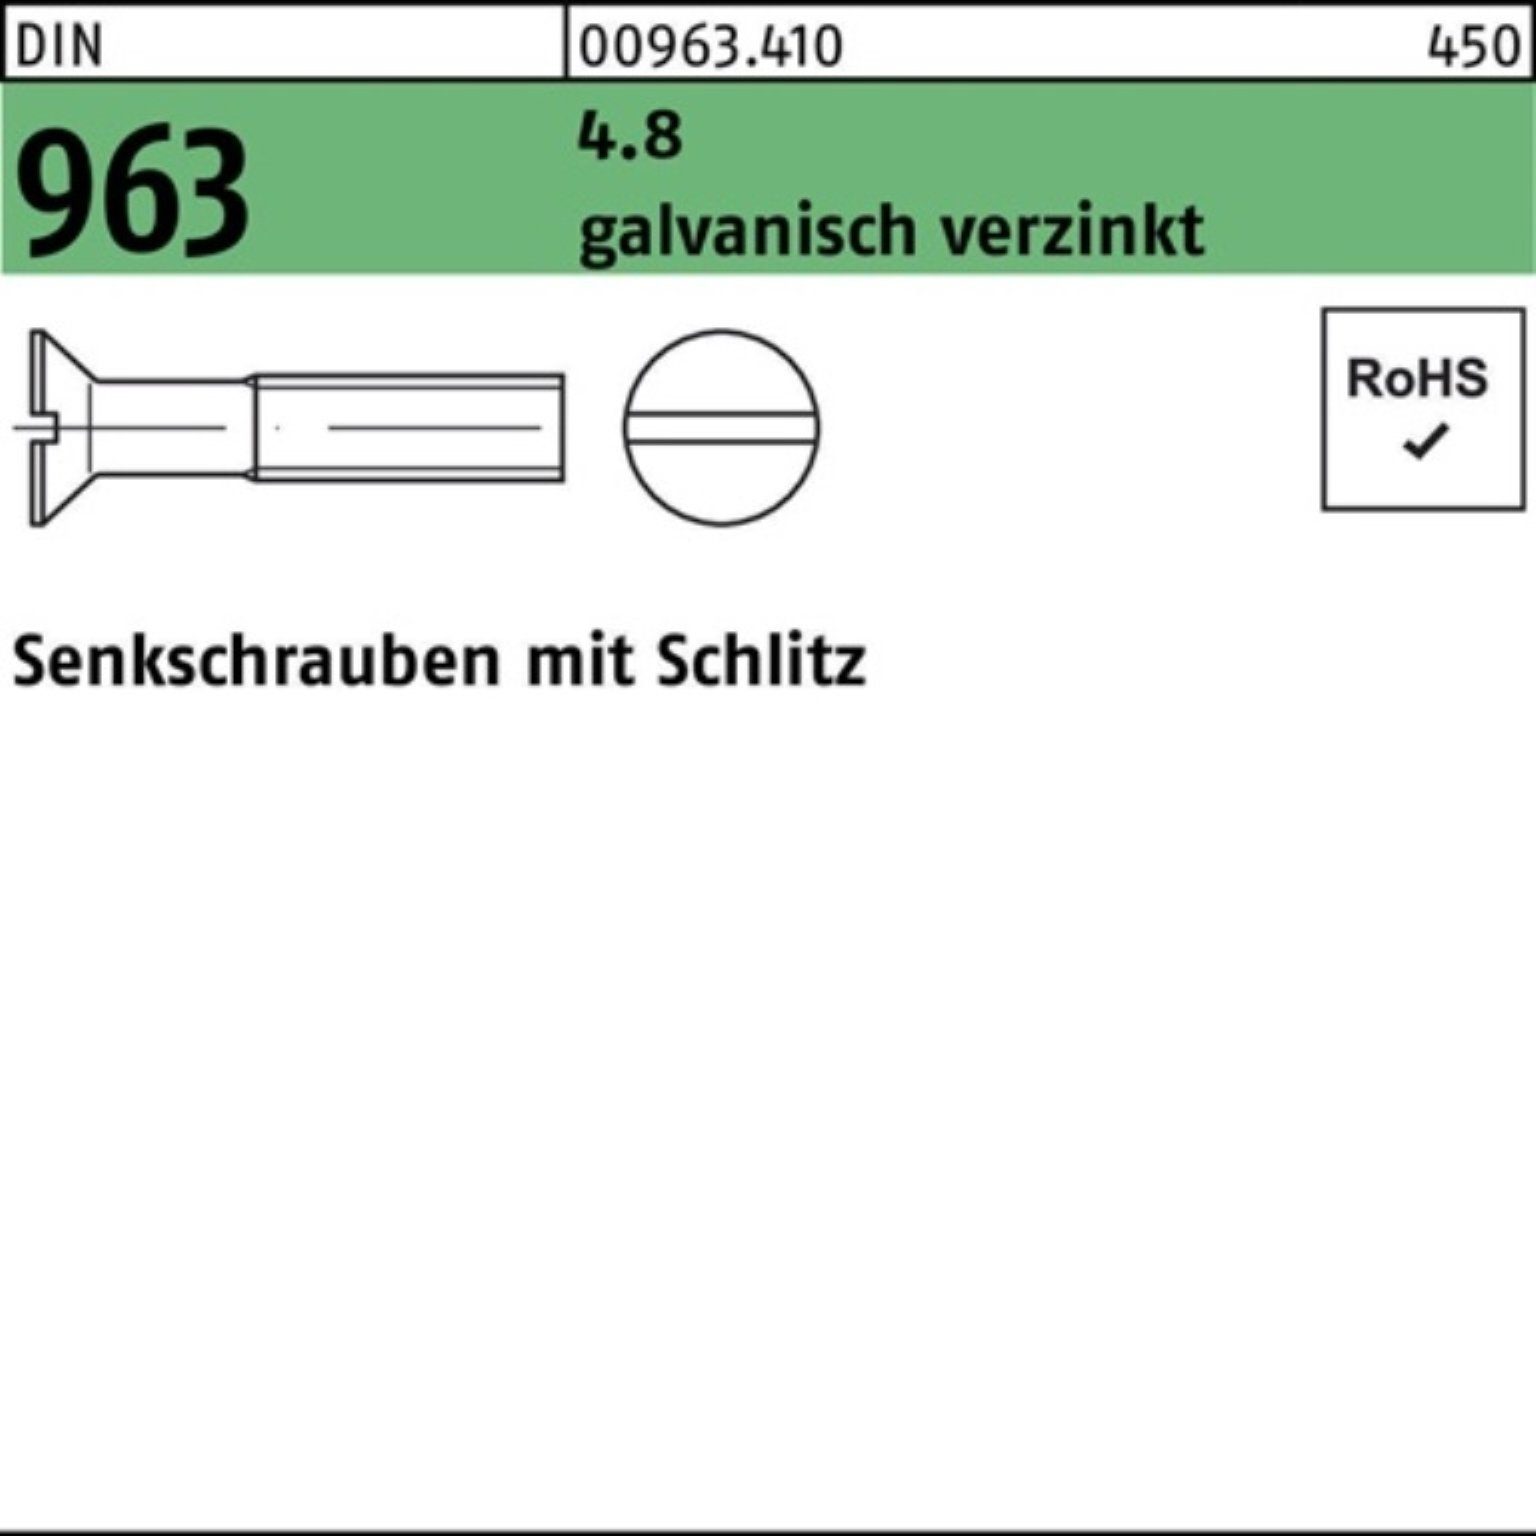 Reyher Senkschraube 200er Pack 40 DIN 4.8 200 Stü 963 M4x Senkschraube galv.verz. Schlitz